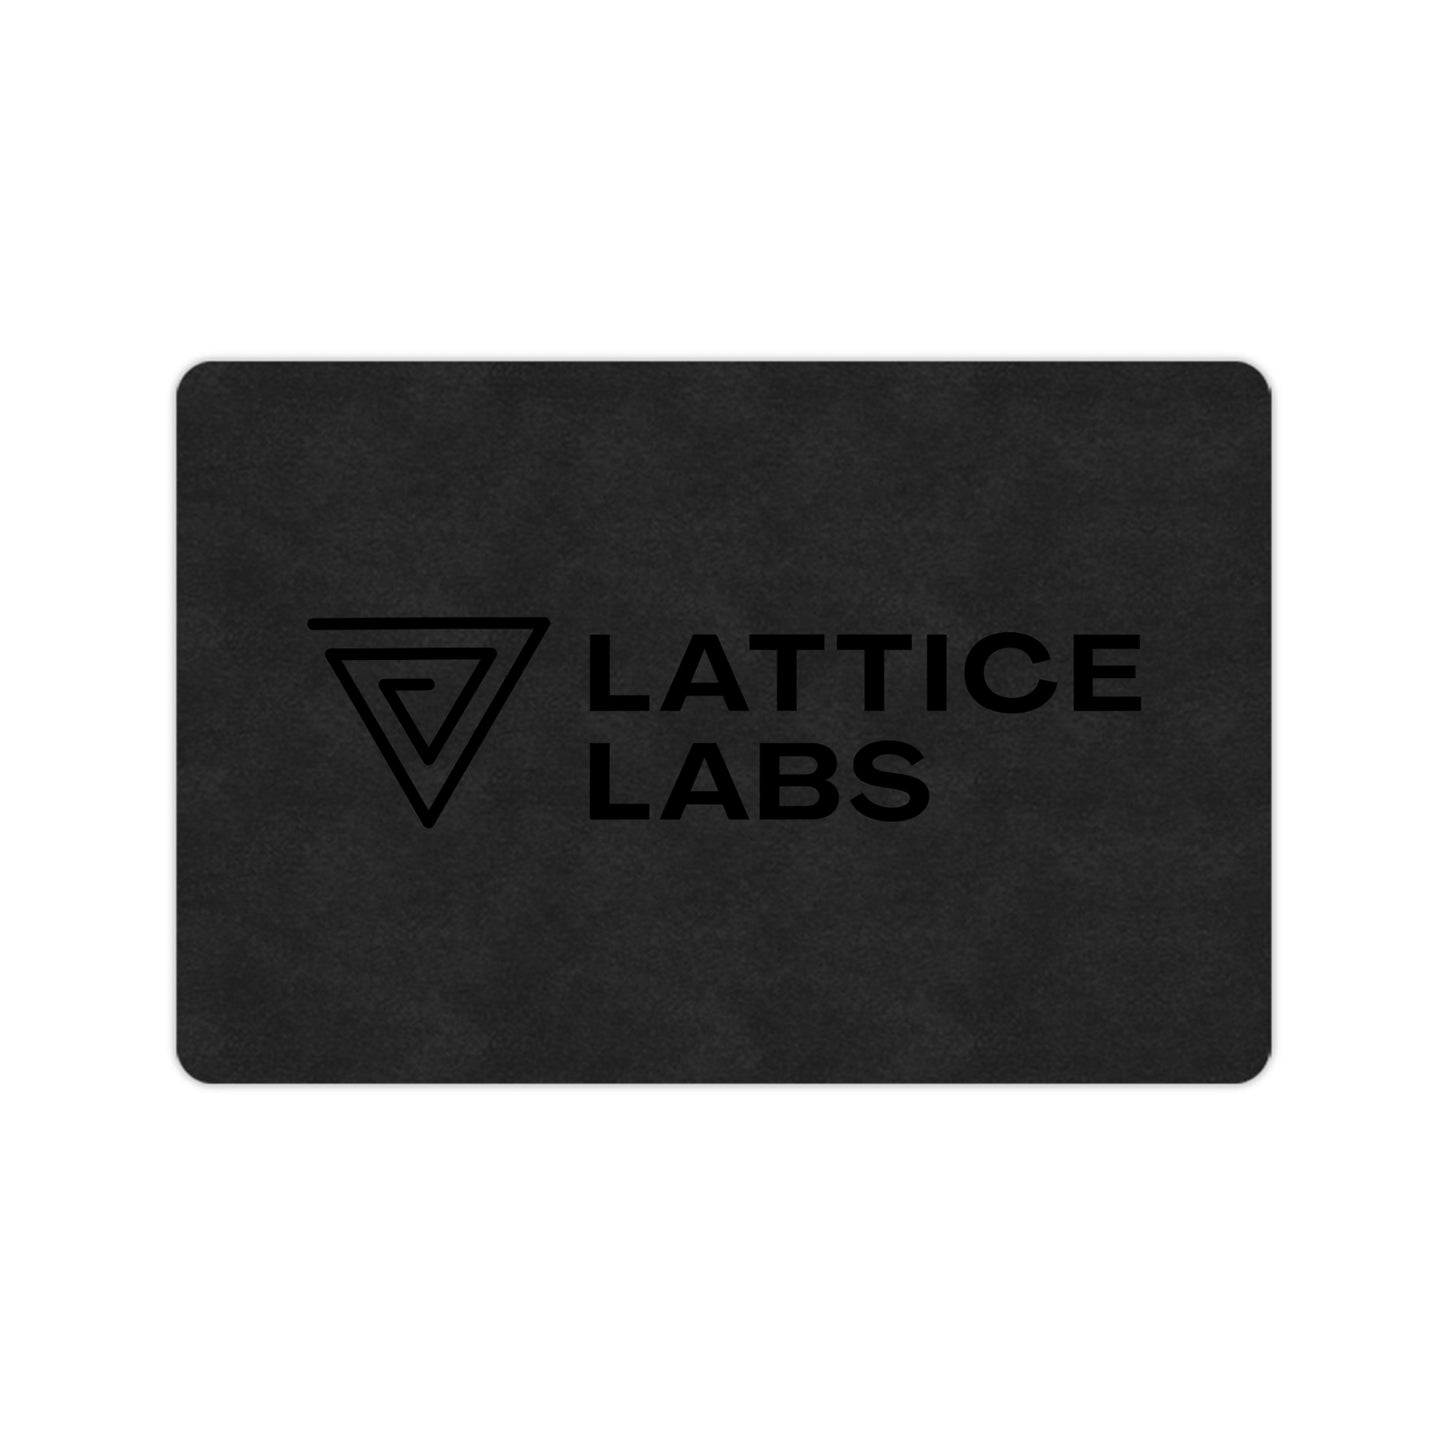 Lattice Labs Doormat